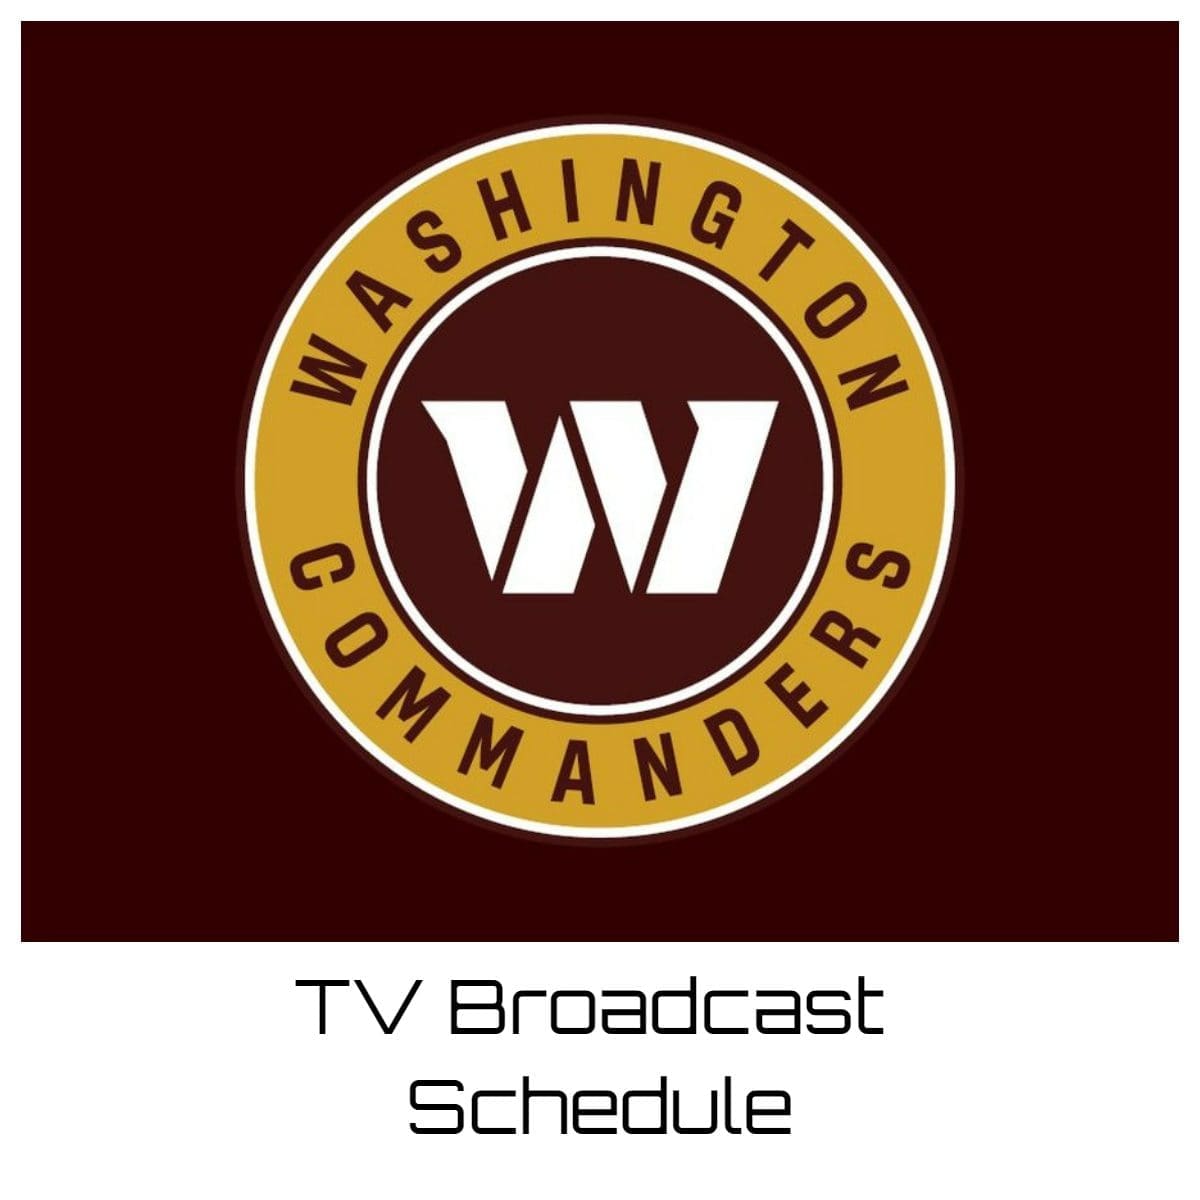 Washington Commanders TV Broadcast Schedule 2022  Printable PDF